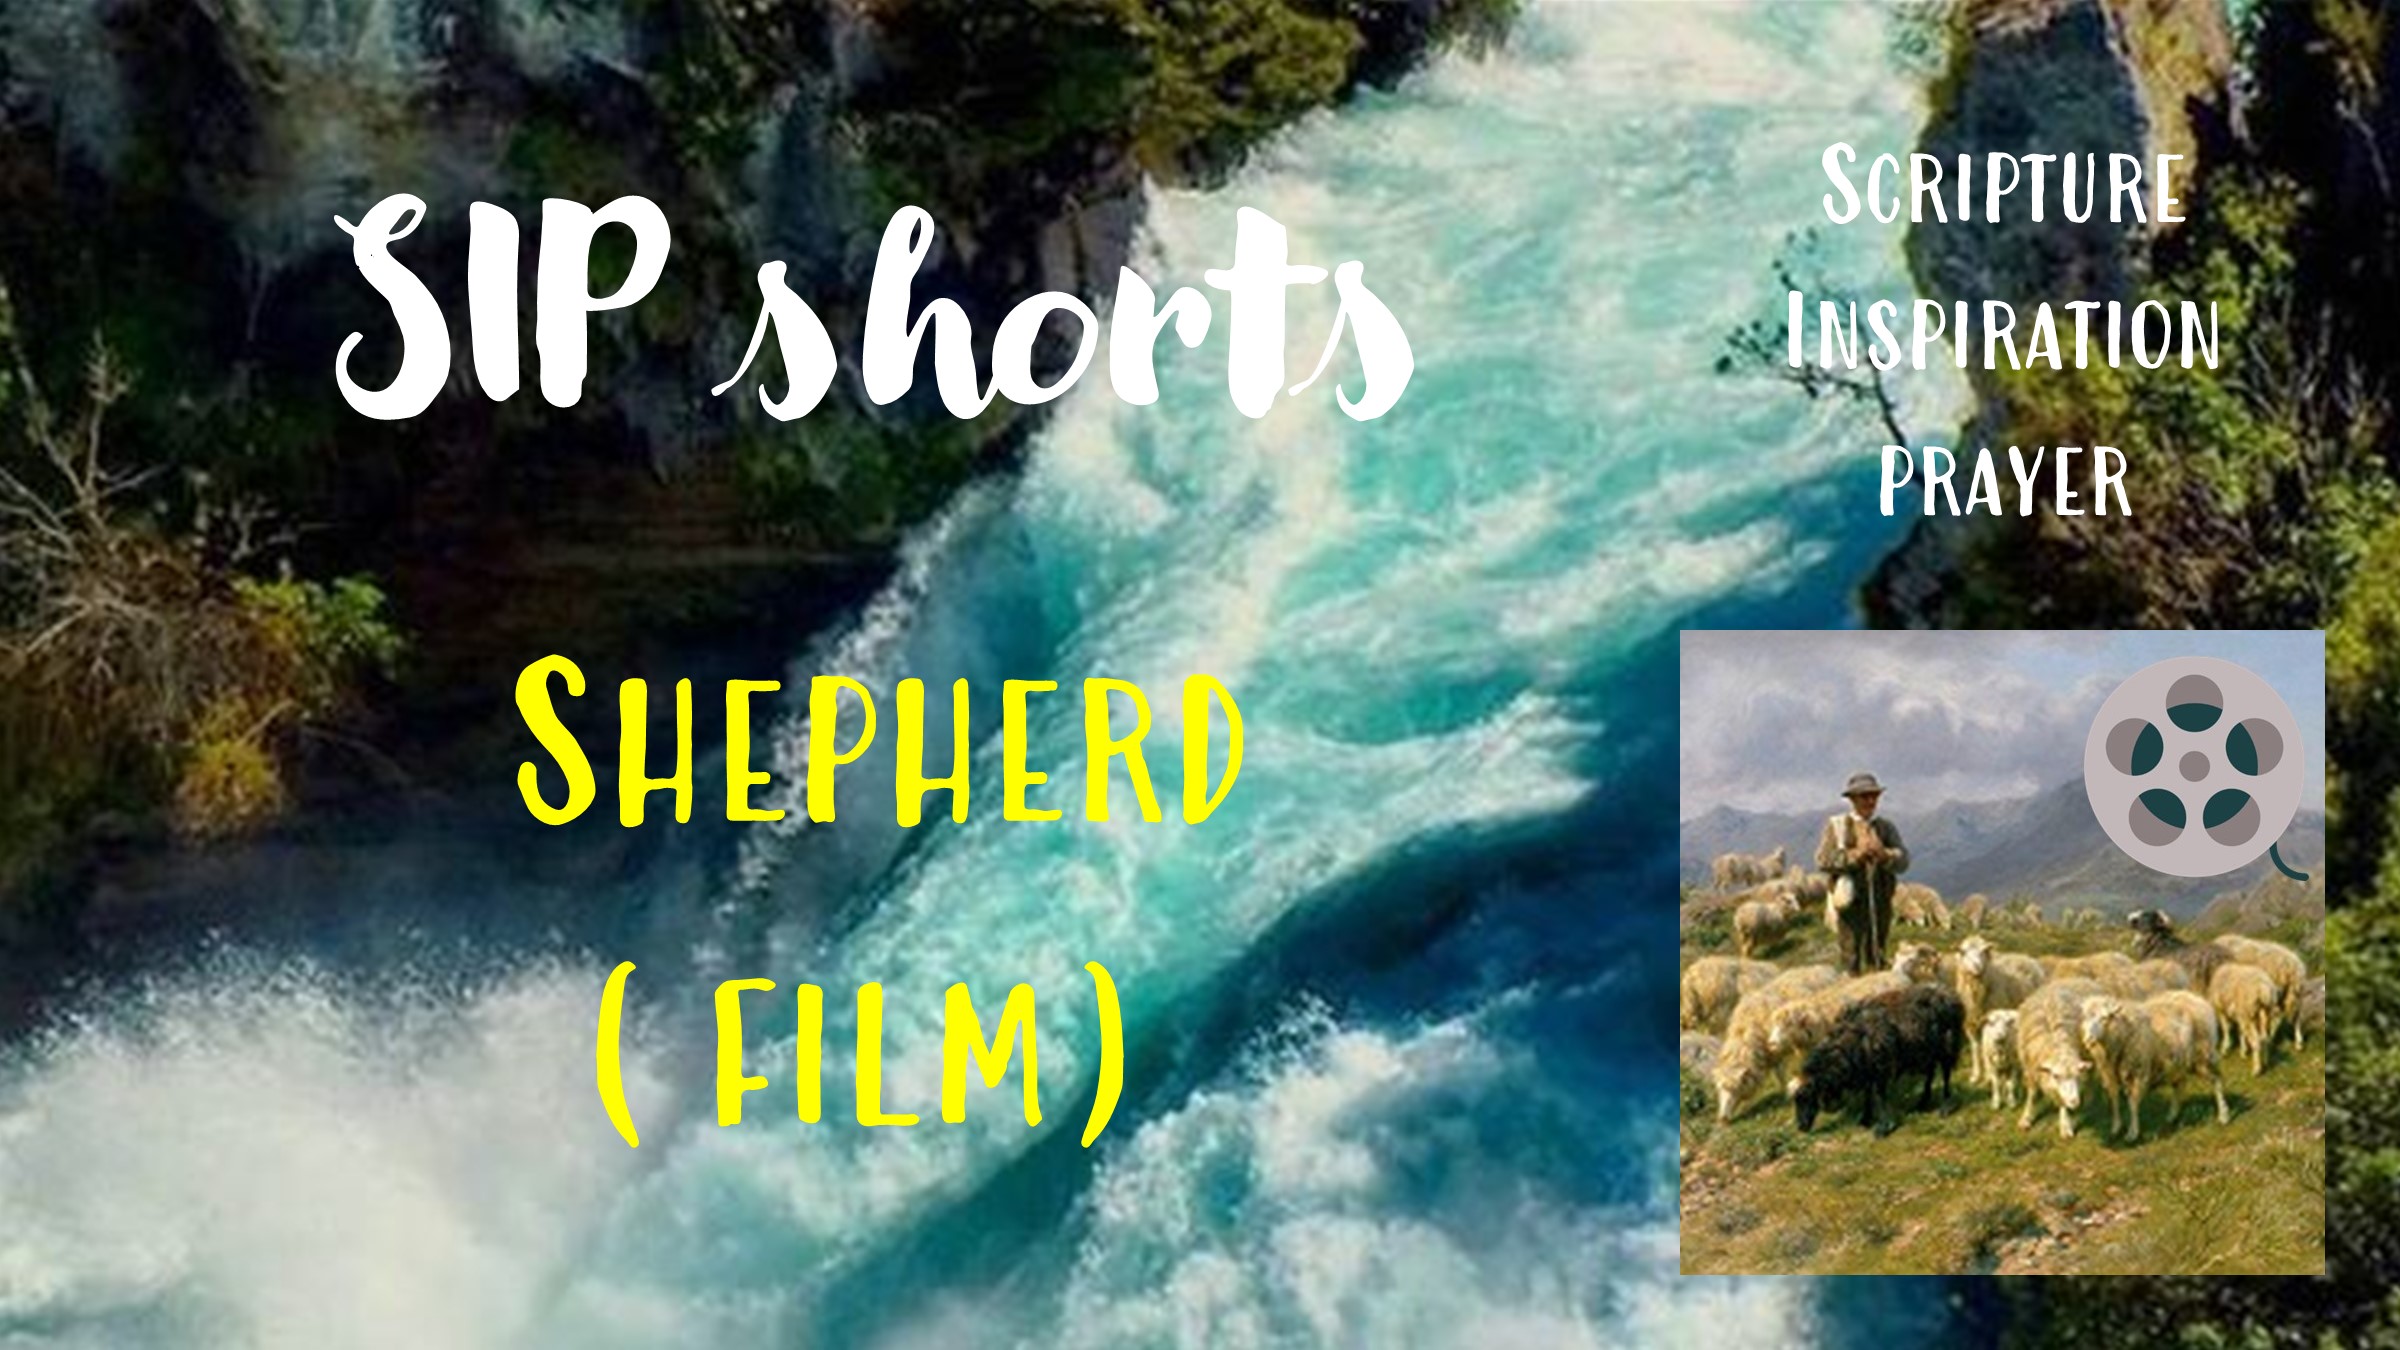 Shepherd – Film SIP #shorts (Scripture, Inspiration, Prayer – devotions on God’s attributes)